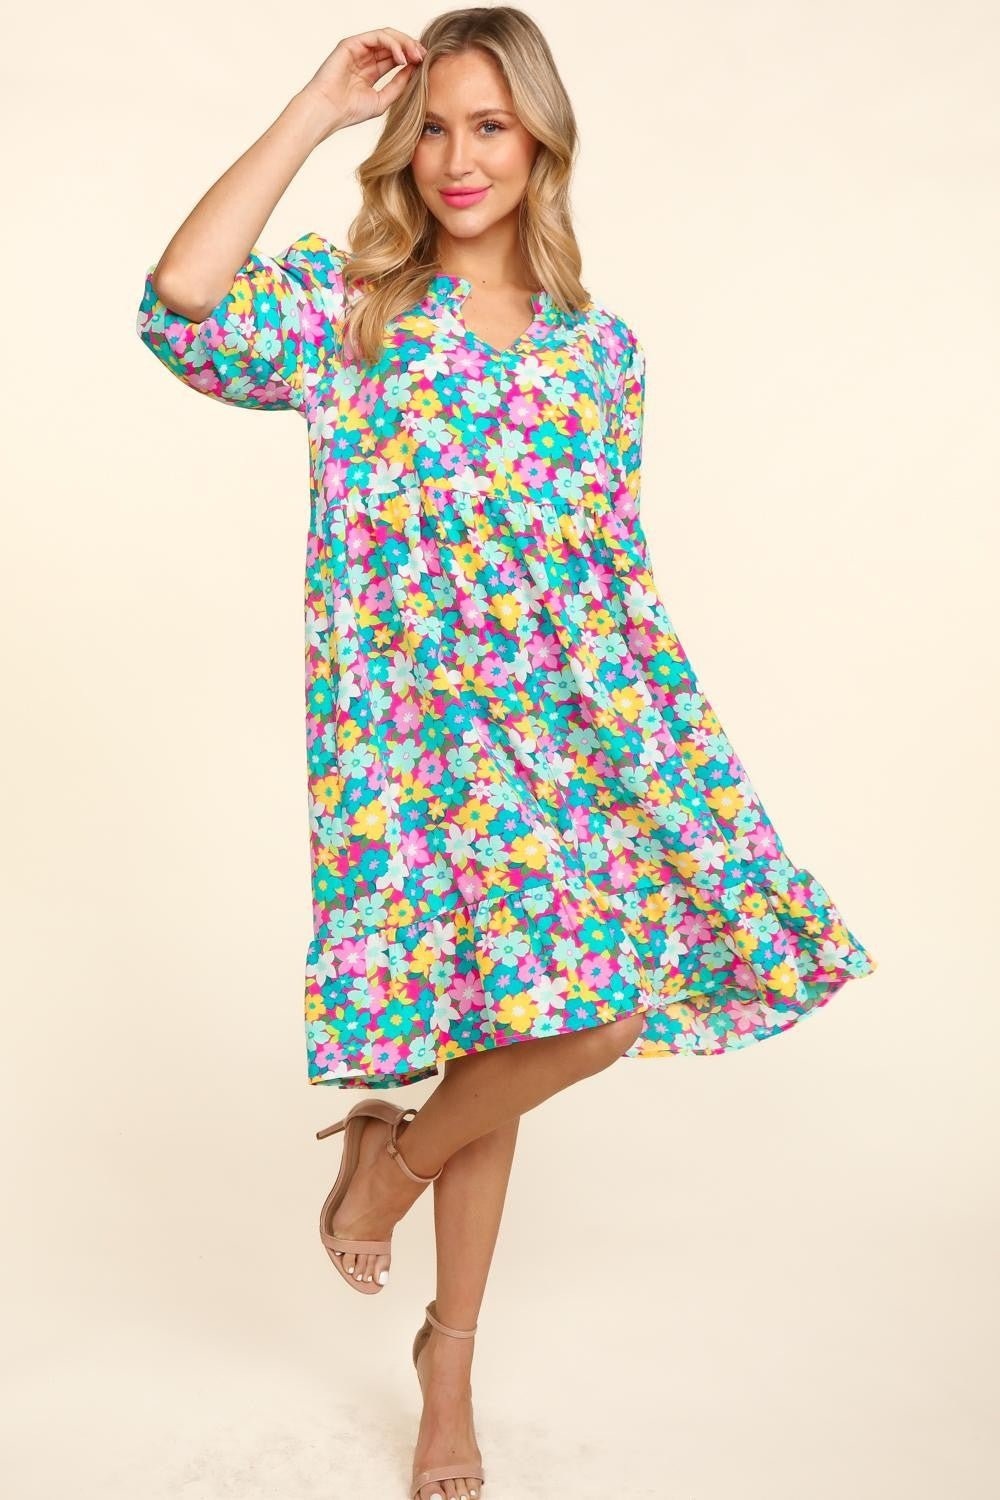 Bubble Sleeve Floral Ruffled Knee-Length Dress in Mint FuchsiaKnee-Length DressHaptics